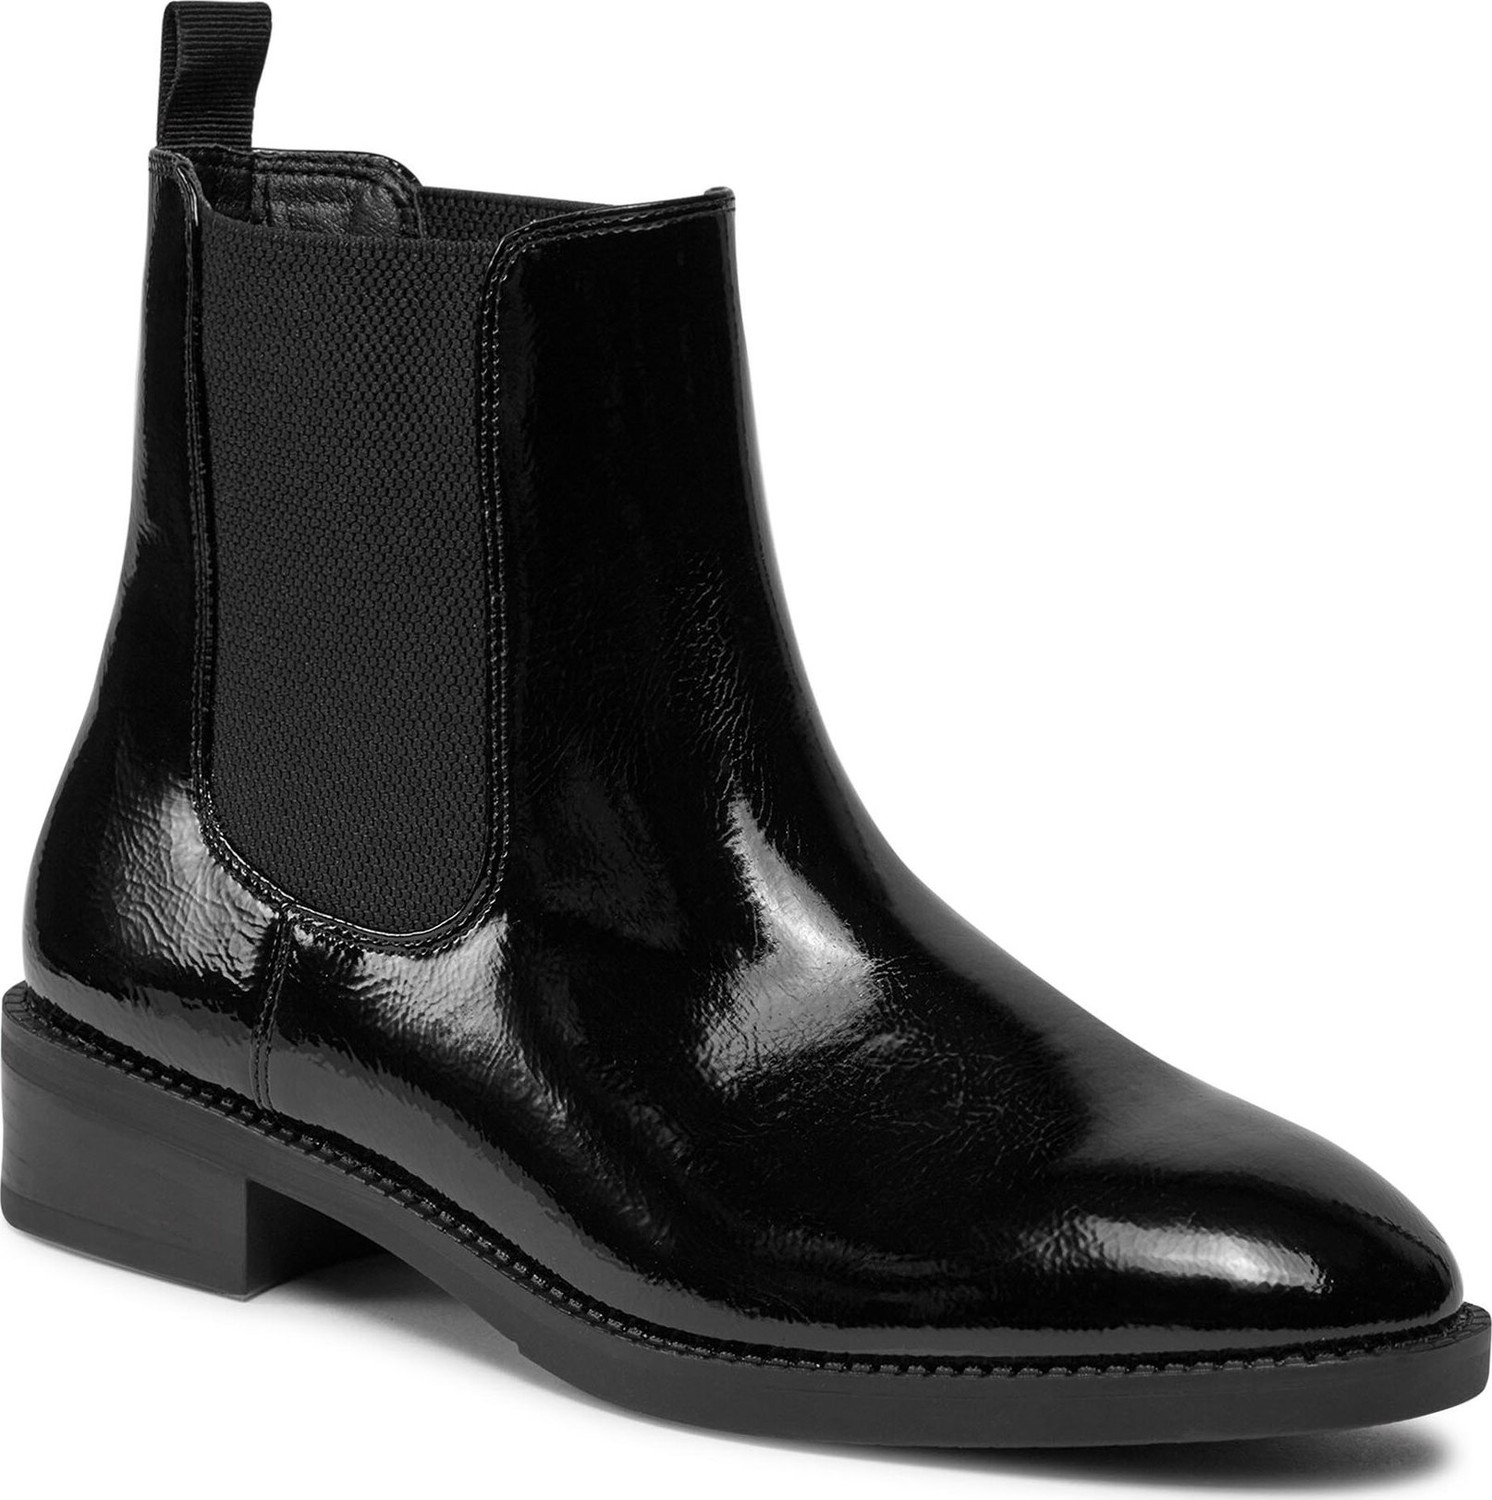 Kotníková obuv s elastickým prvkem Tamaris 1-25340-41 Black Patent 018